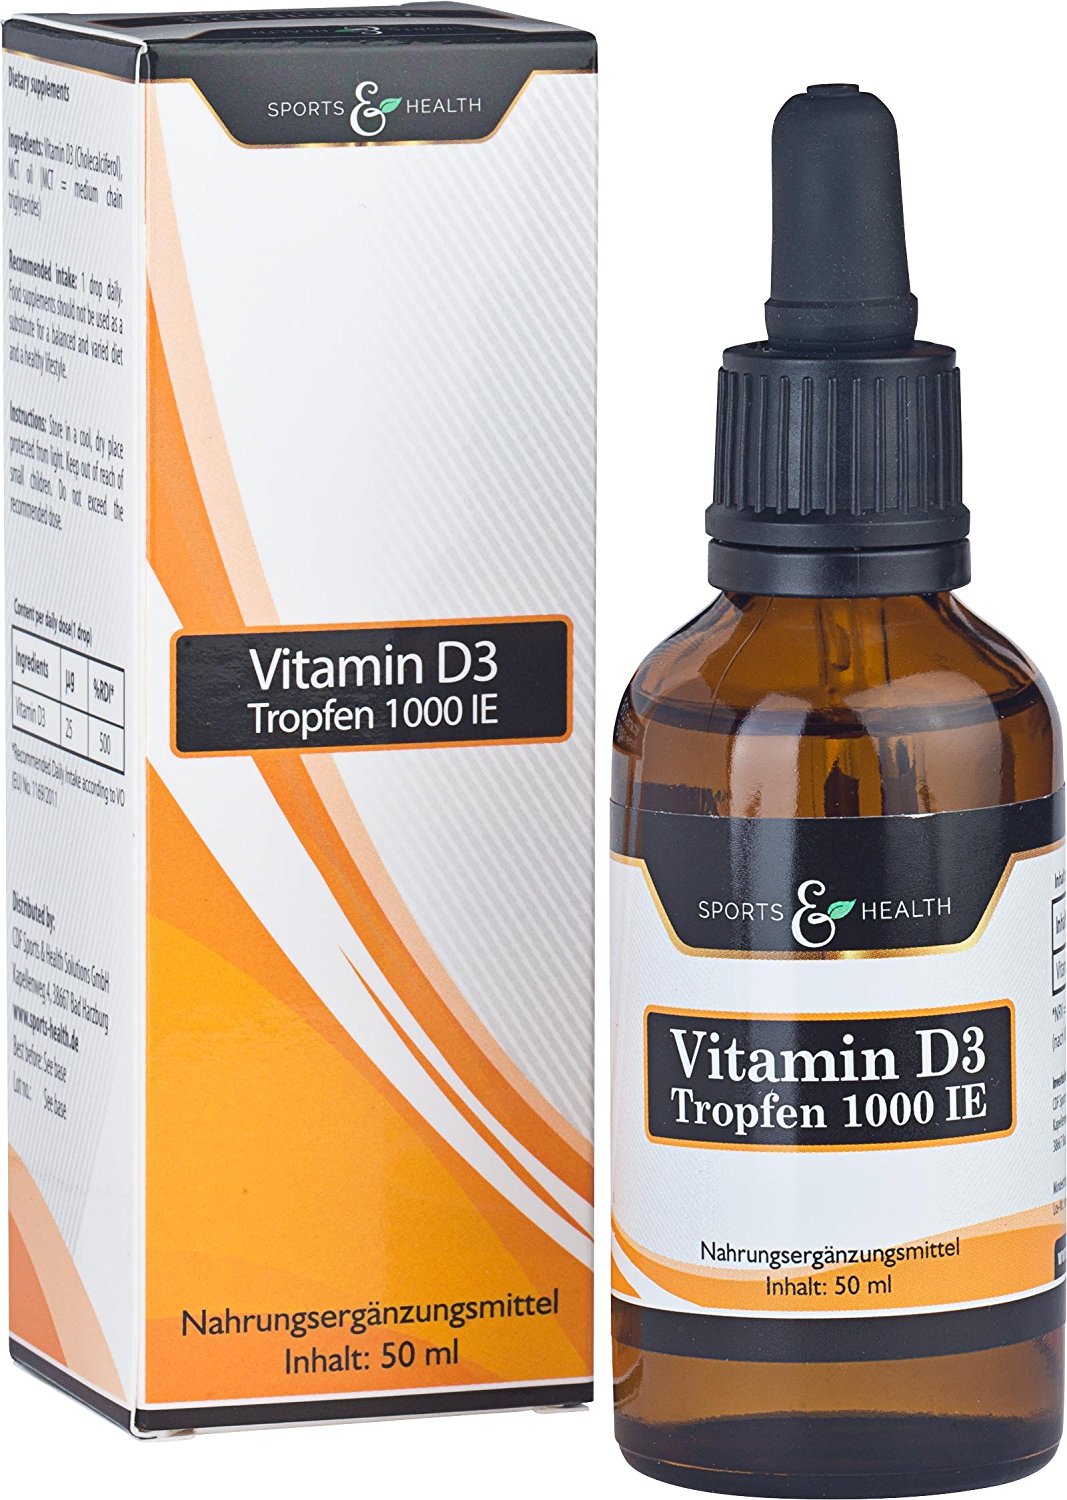 Vitamin D3 Tropfen 1000 IE 50ml